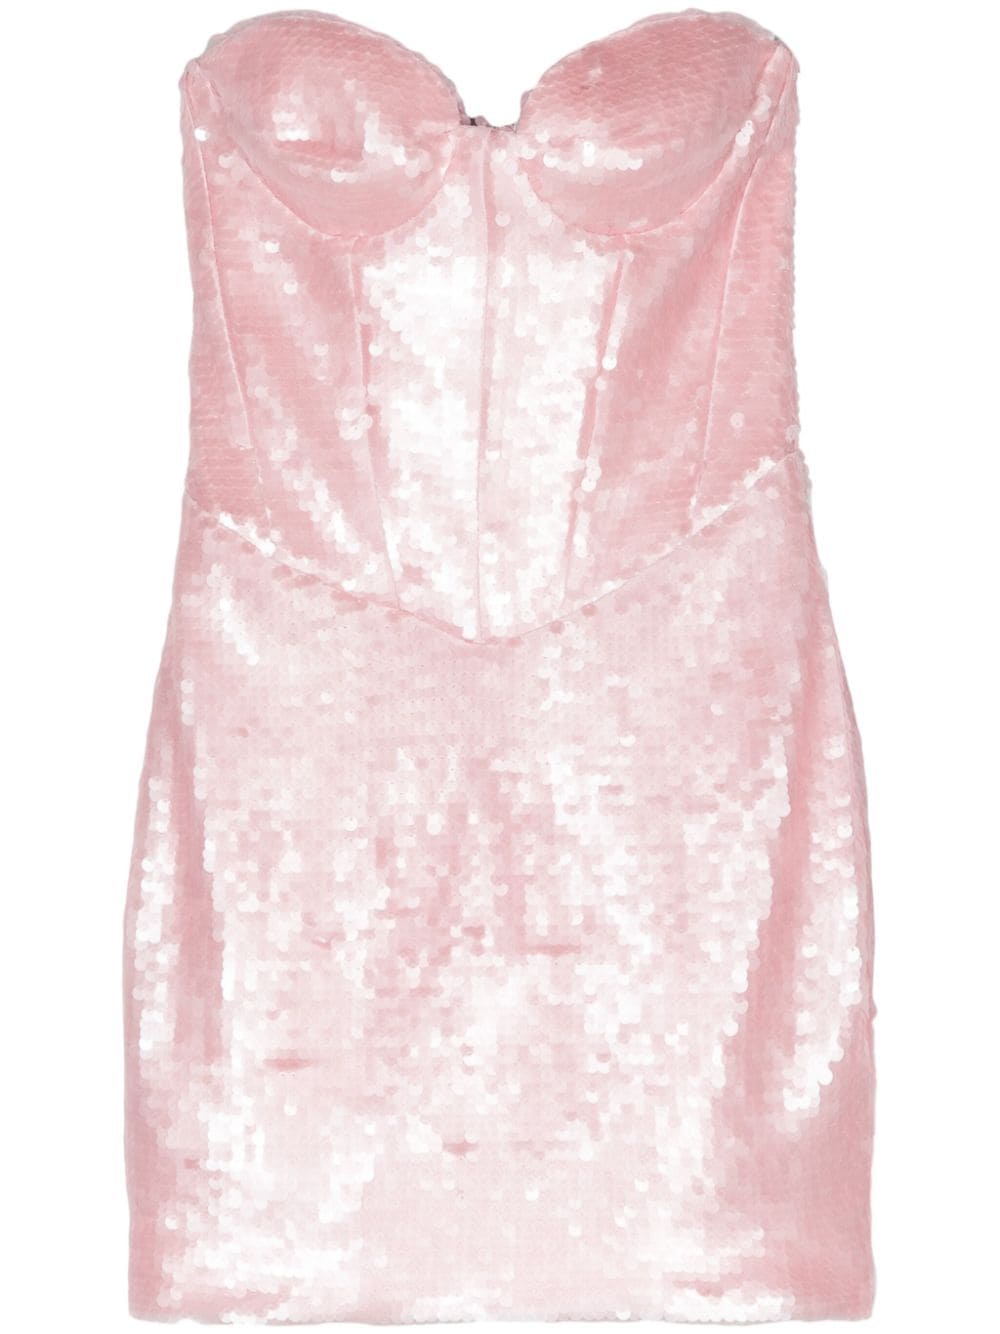 The New Arrivals Ilkyaz Ozel sequinned corset minidress - Pink von The New Arrivals Ilkyaz Ozel